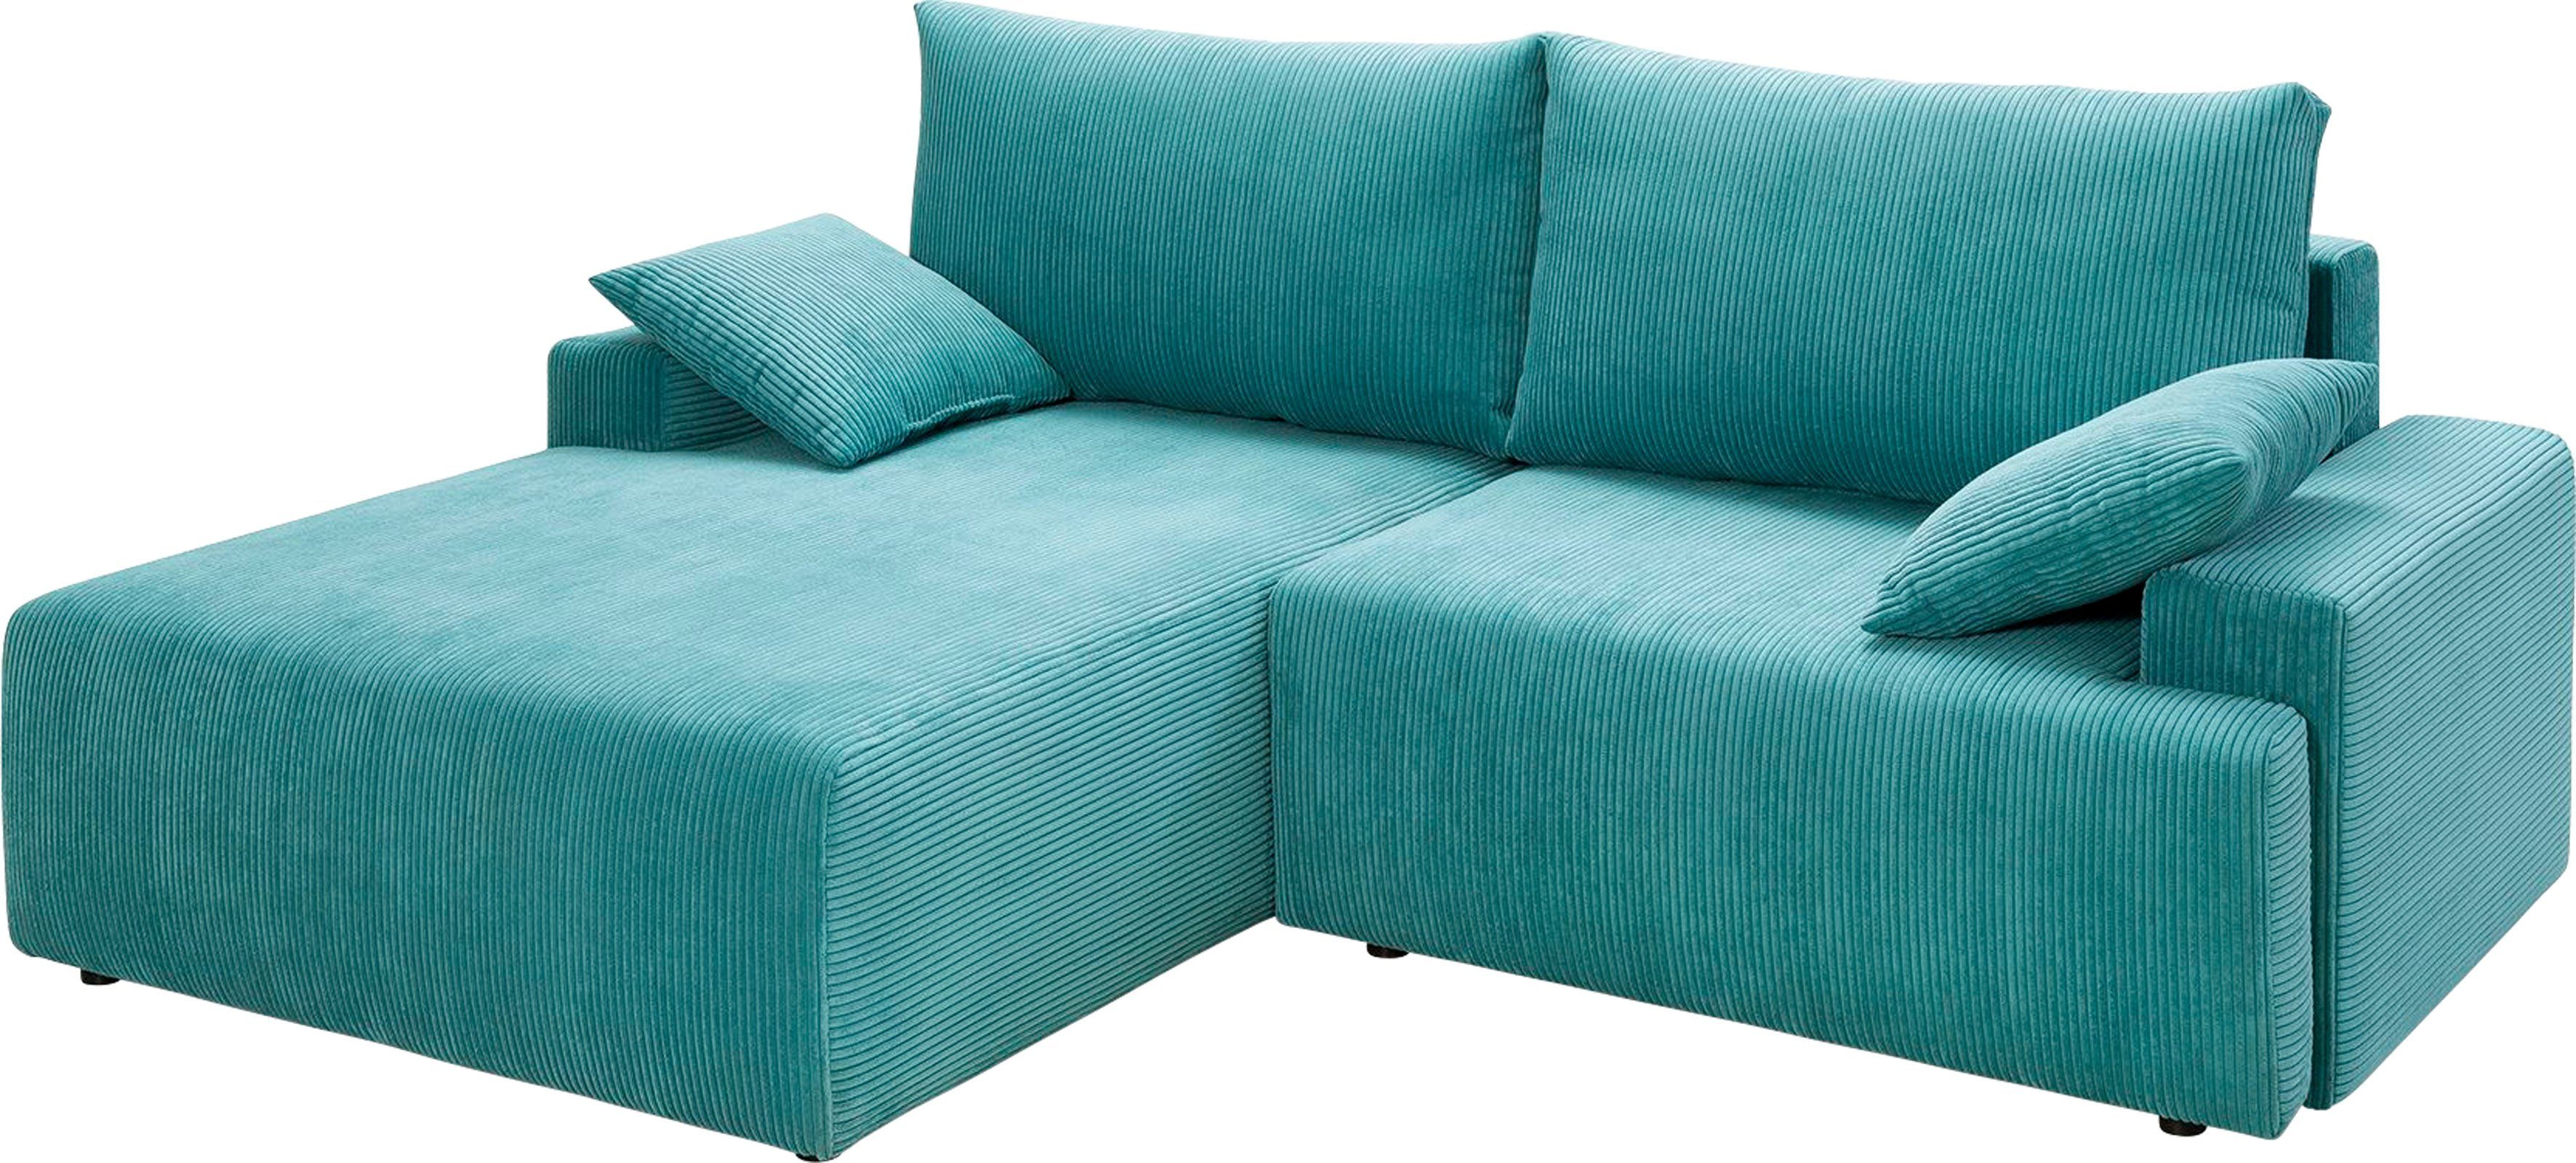 sofa - inklusive Cord-Farben Ecksofa in verschiedenen sky und fashion Bettfunktion Orinoko, exxpo Bettkasten